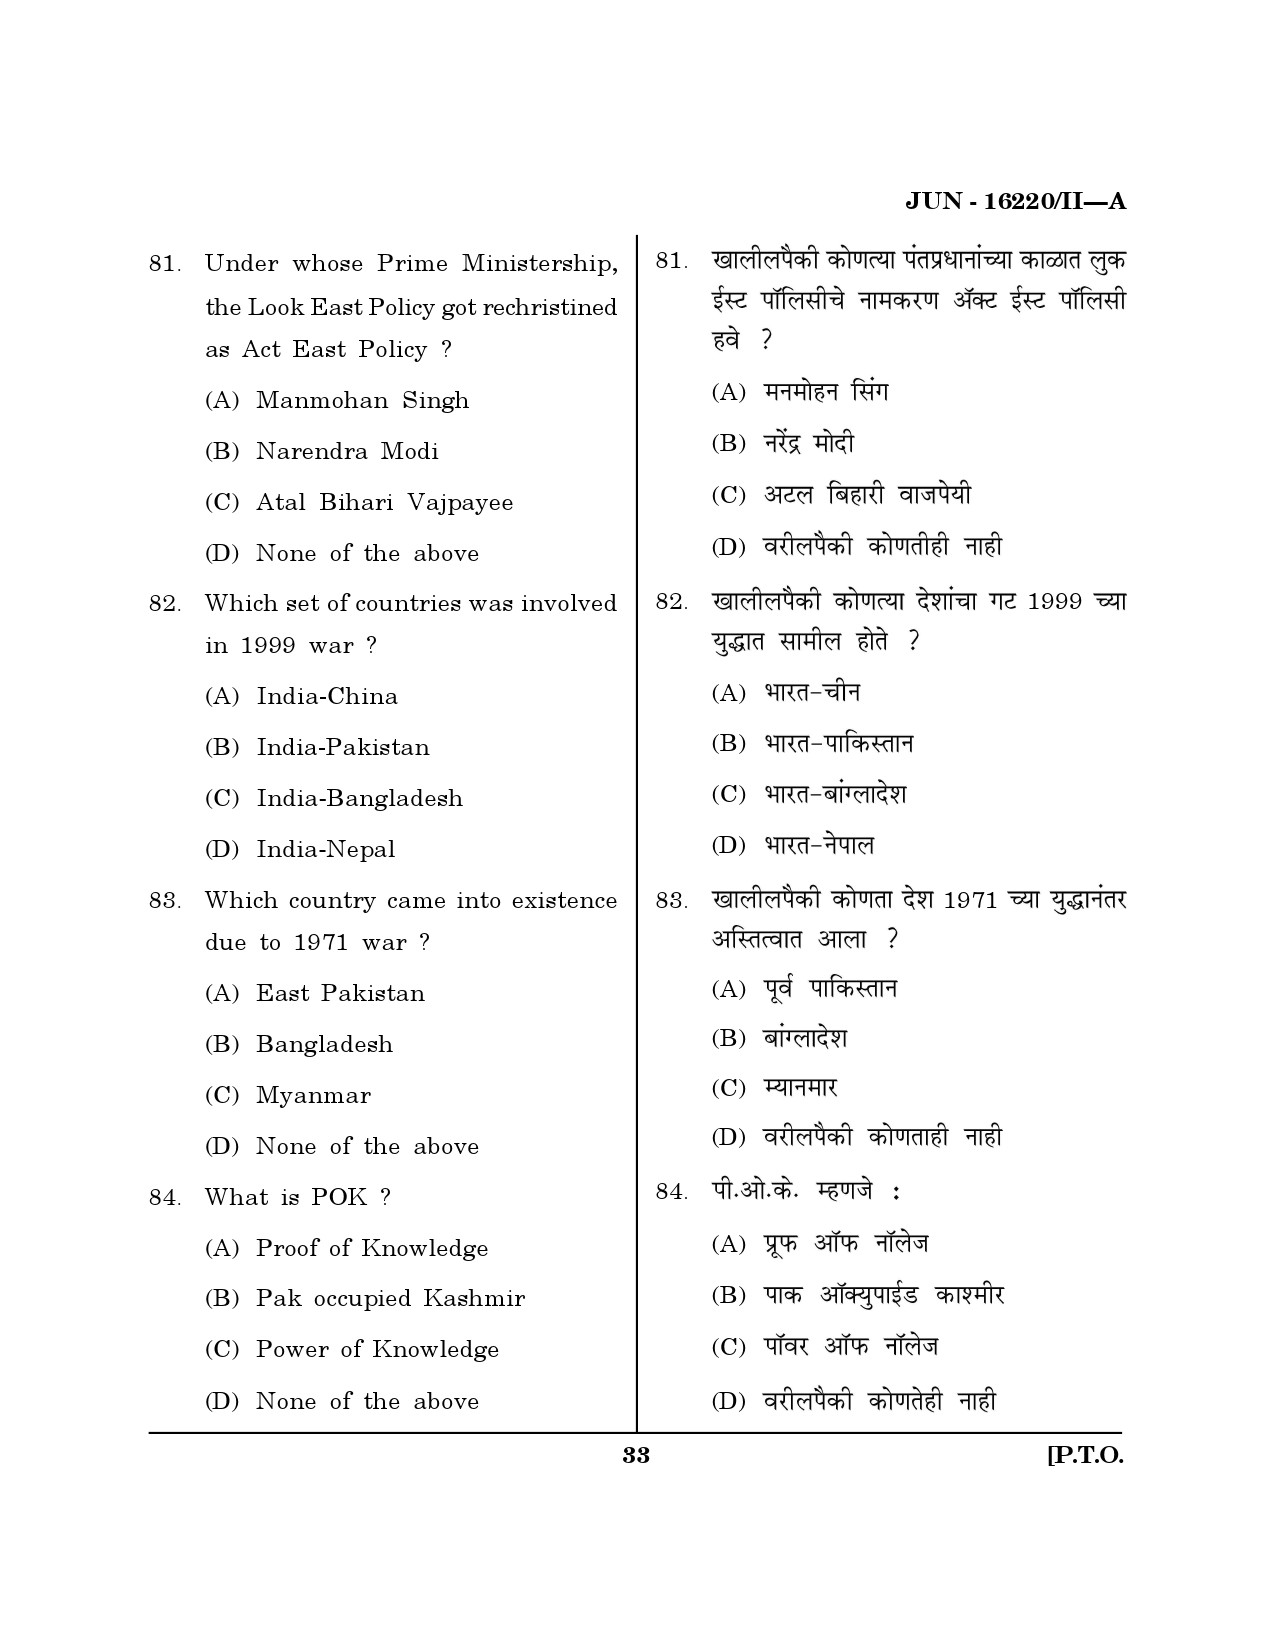 Maharashtra SET Defence and Strategic Studies Question Paper II June 2020 32